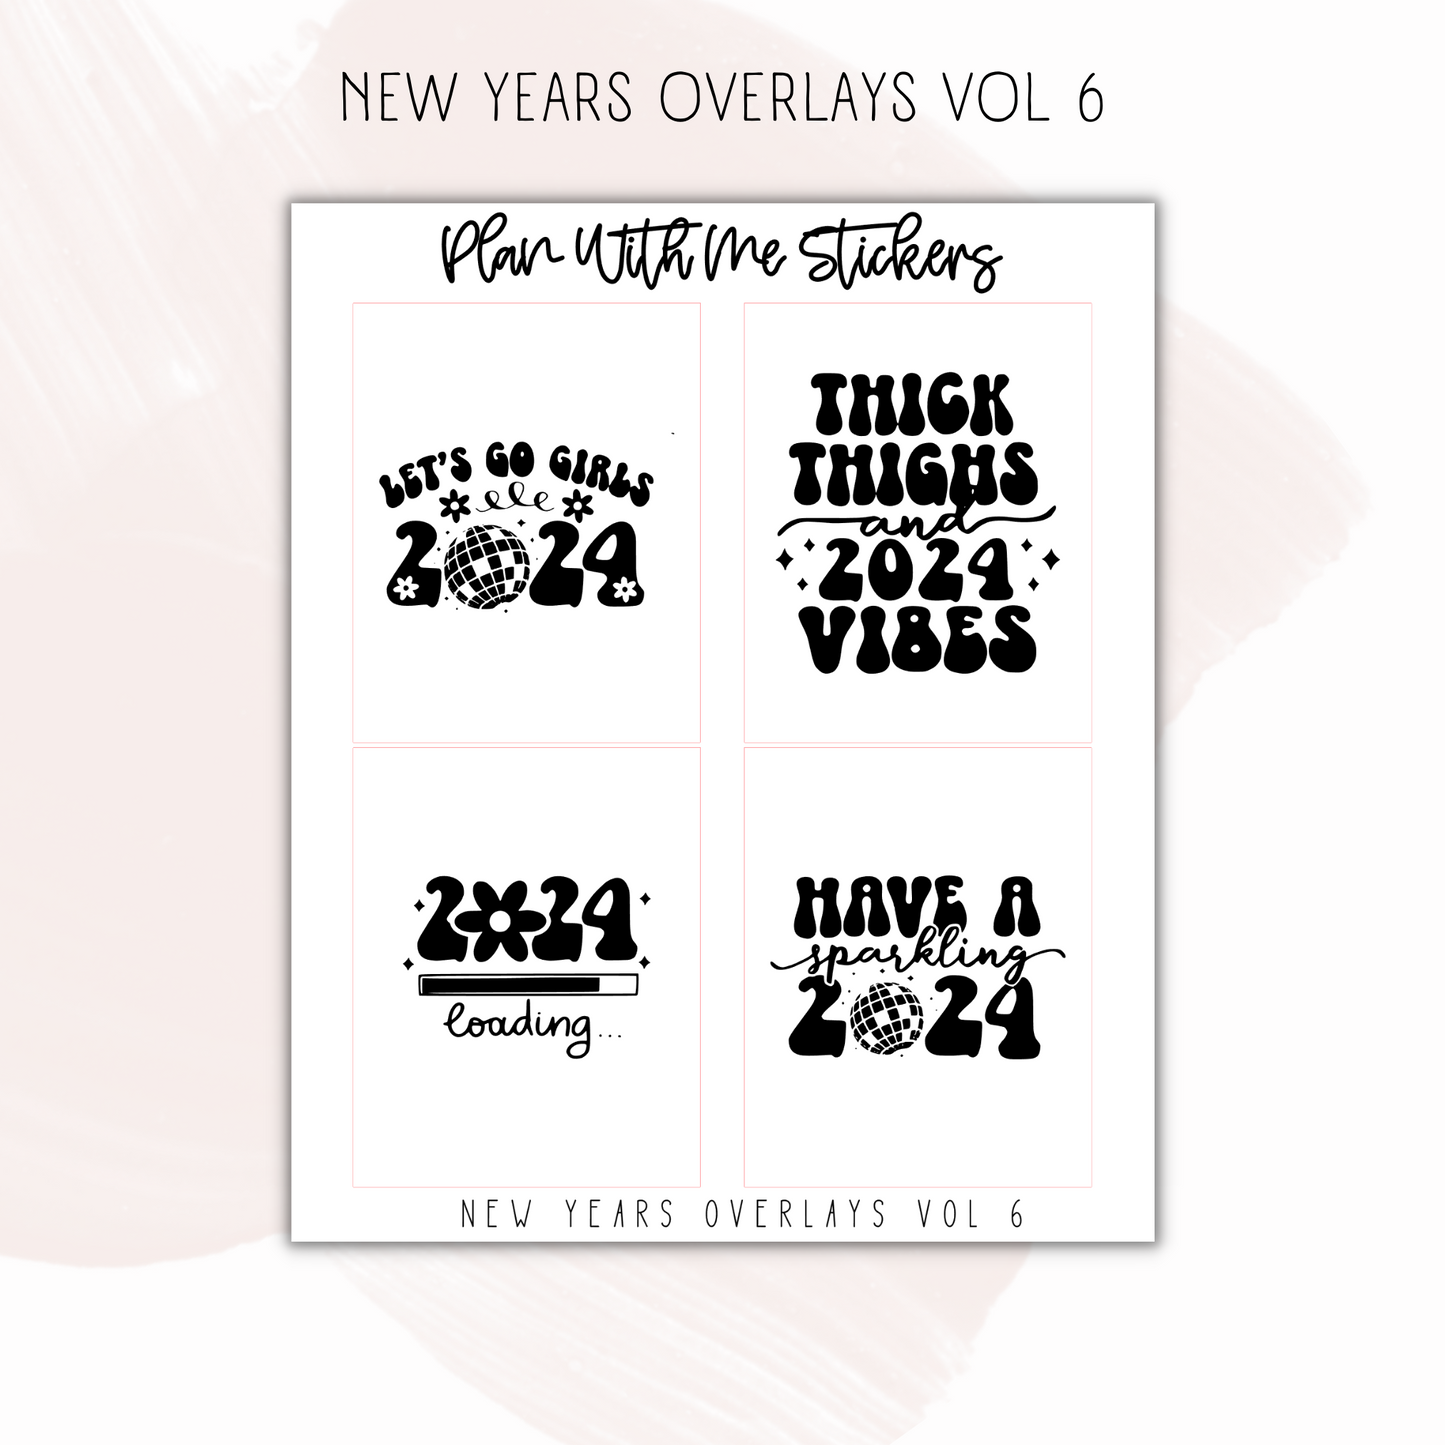 New Years Overlays Vol 6